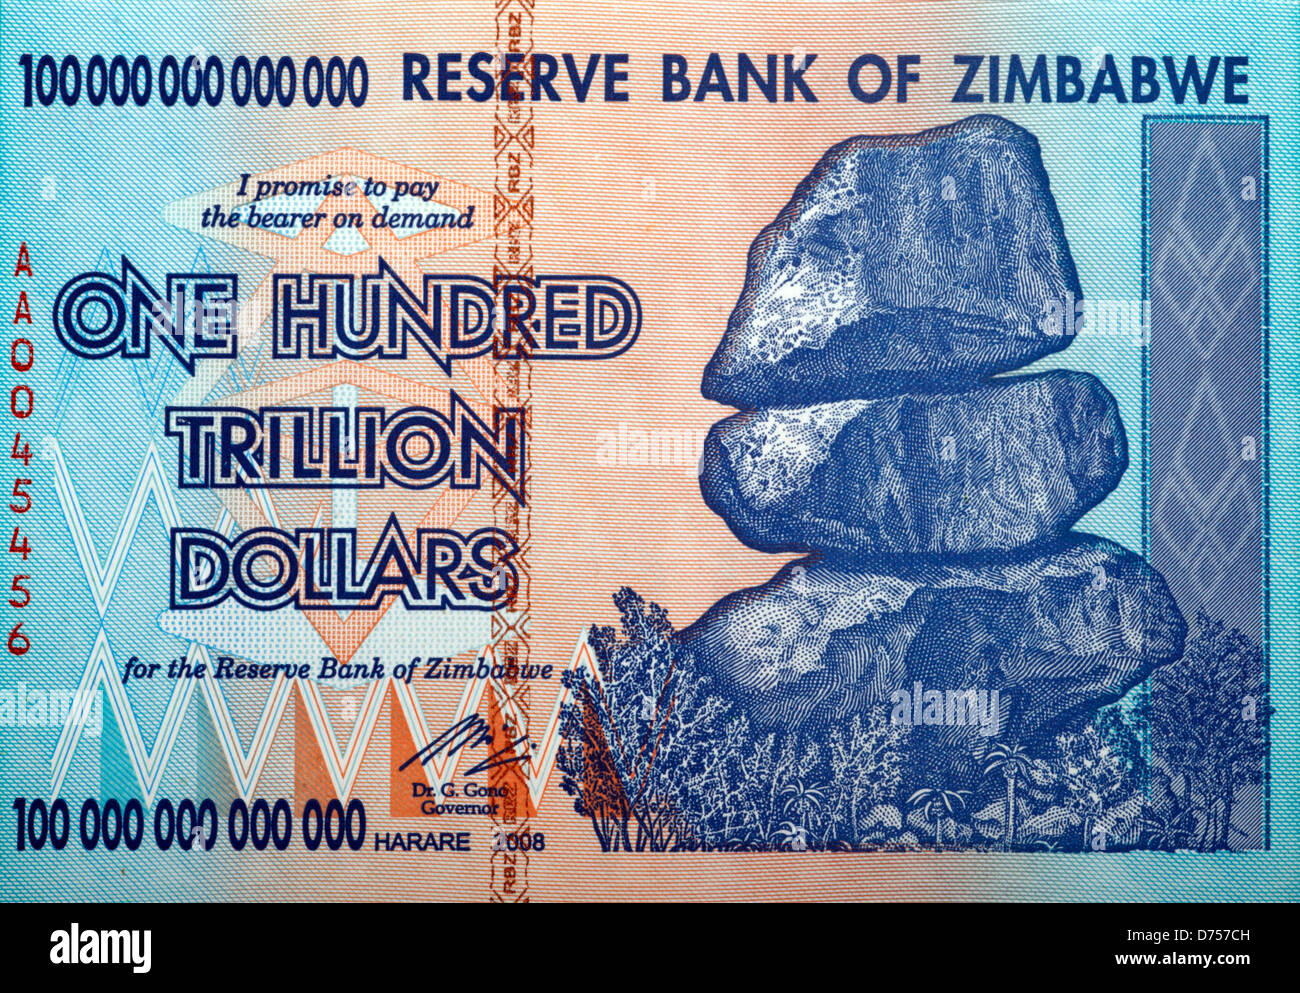 One Hundred Trillion Dollar note Stock Photo